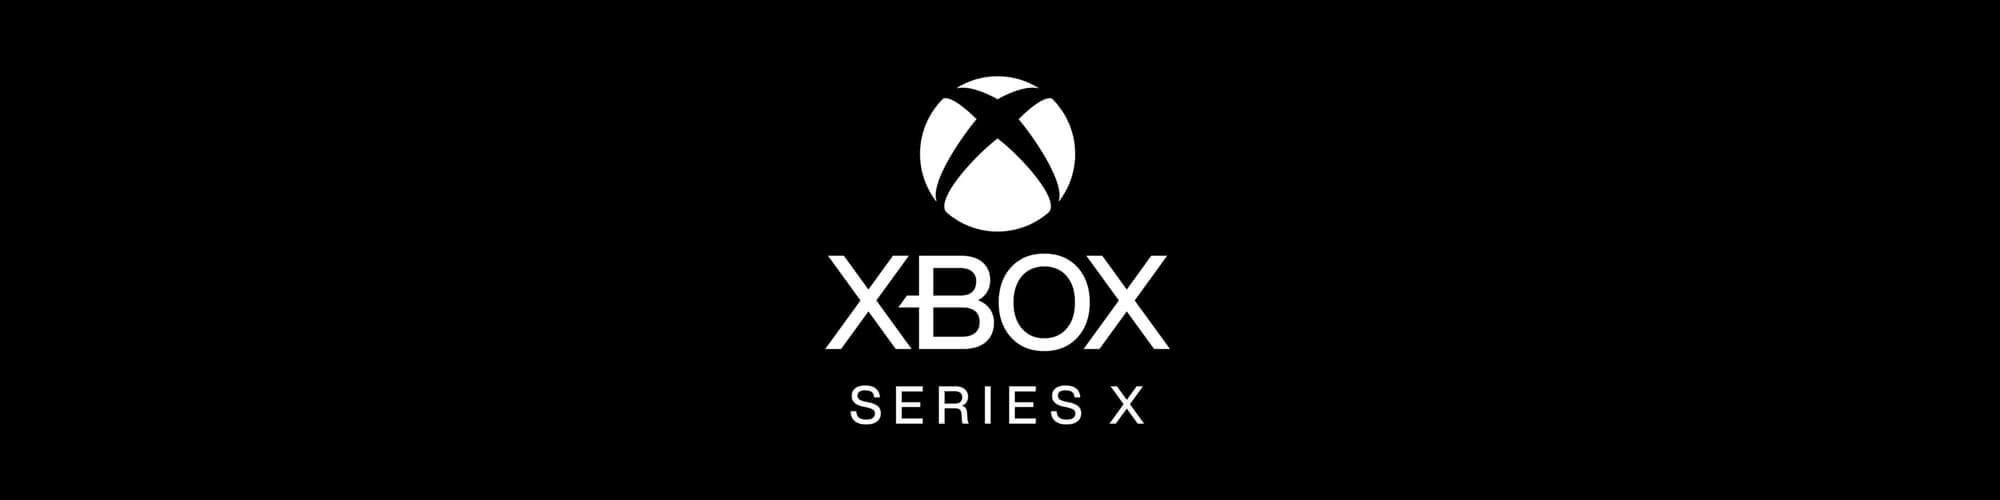  Xbox Series X      Xbox,   HDR  120fps